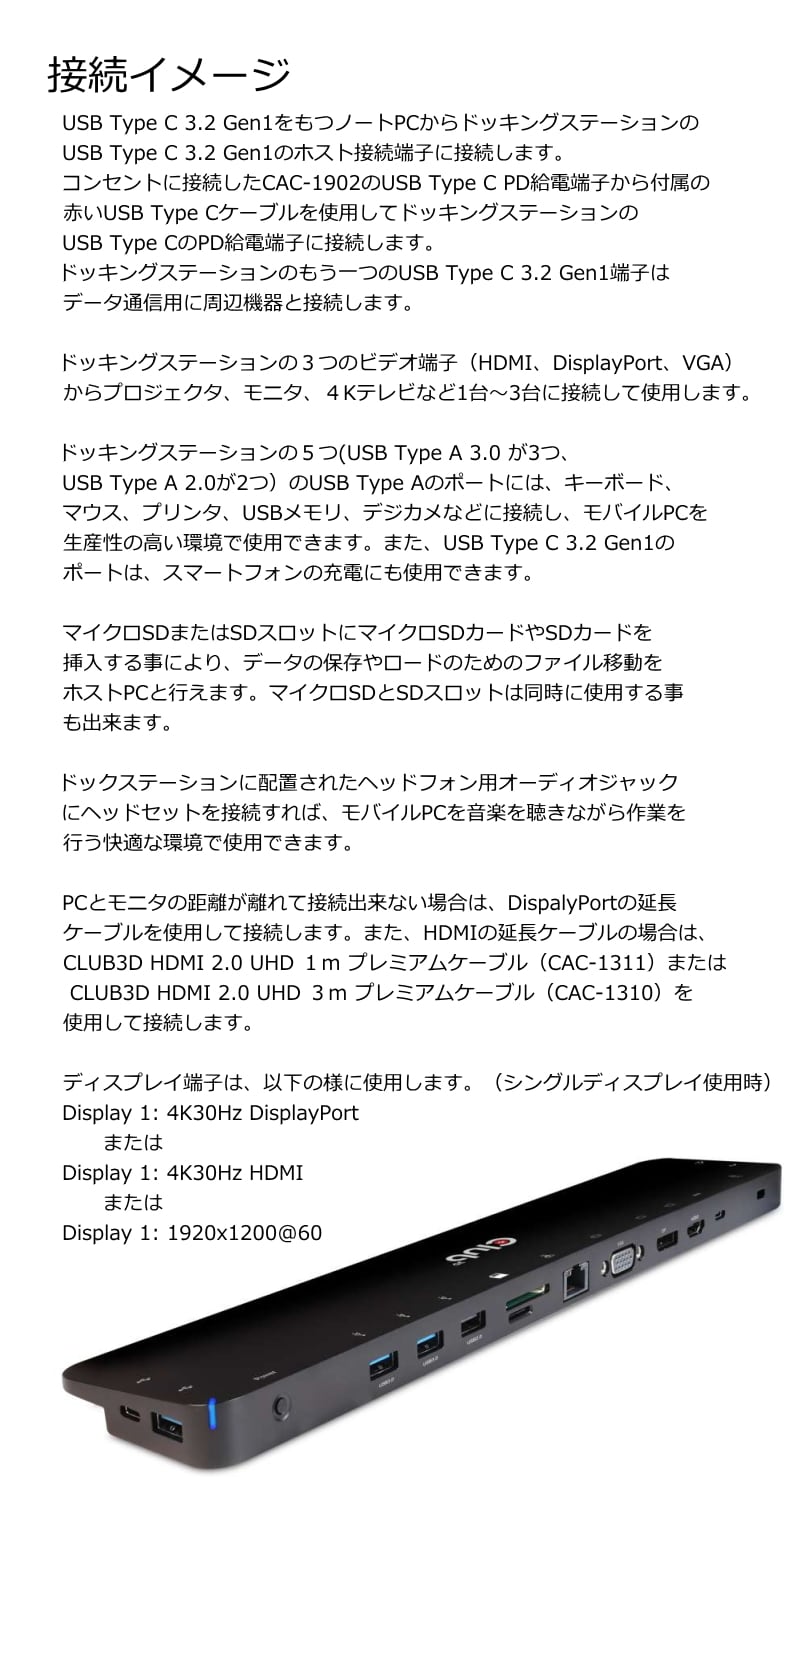 USBアクセサリー Club3D USB 3.2 Gen1 Type C HDMI/DisplayPort/VGA トリプル ディスプレイ 100W  ダイナミッ